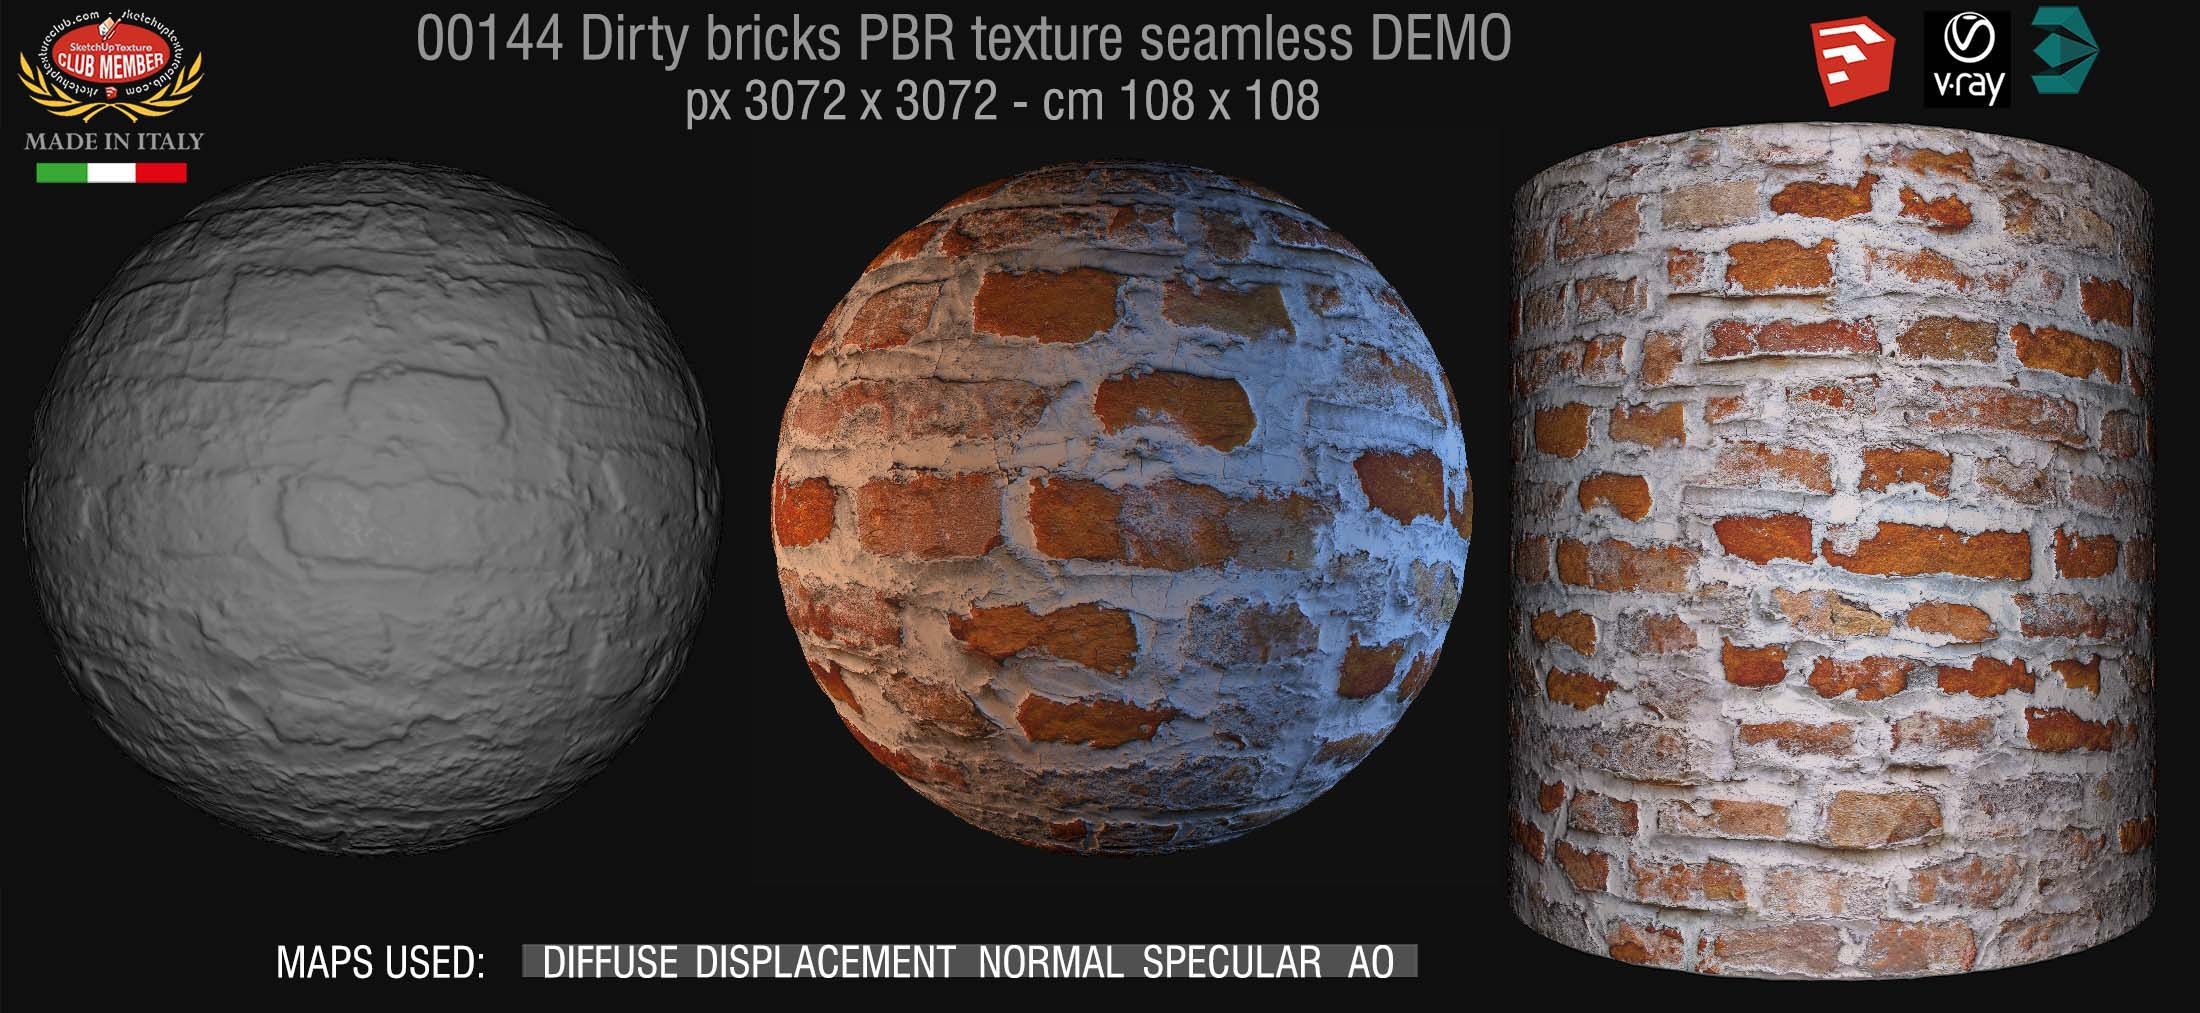 00144 dirty bricks PBR texture seamless DEMO